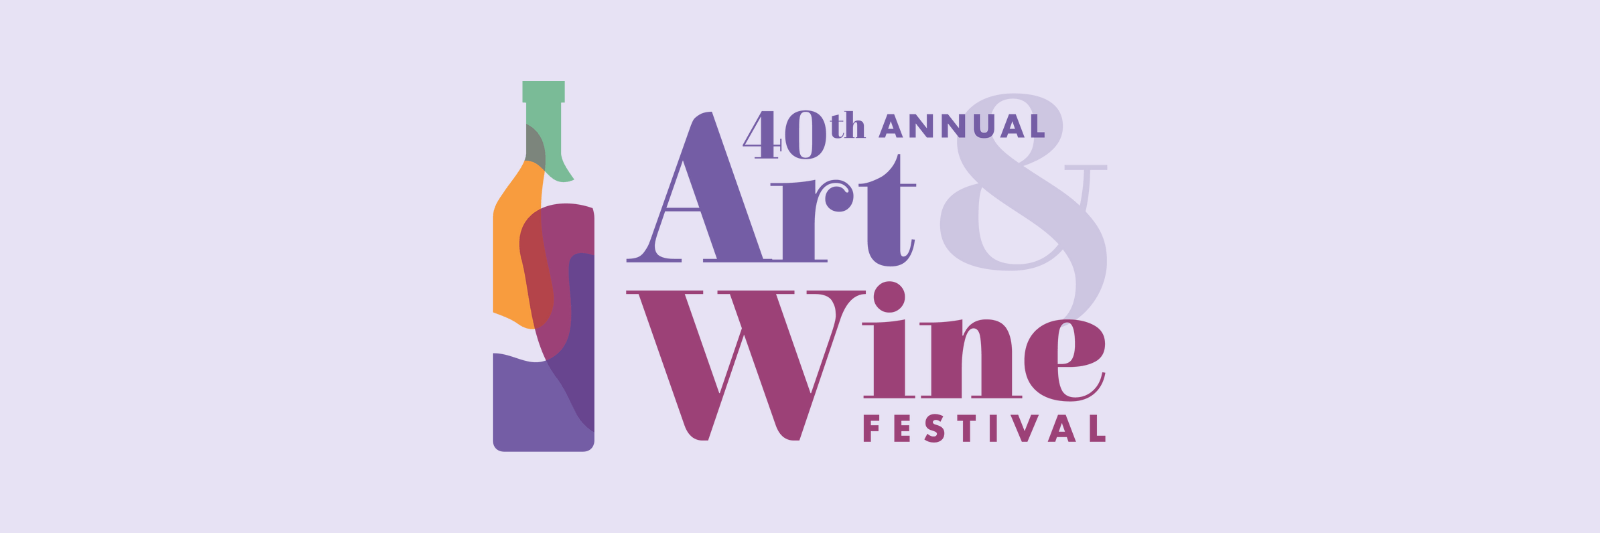 40th Annual Art & Wine Festival Logo